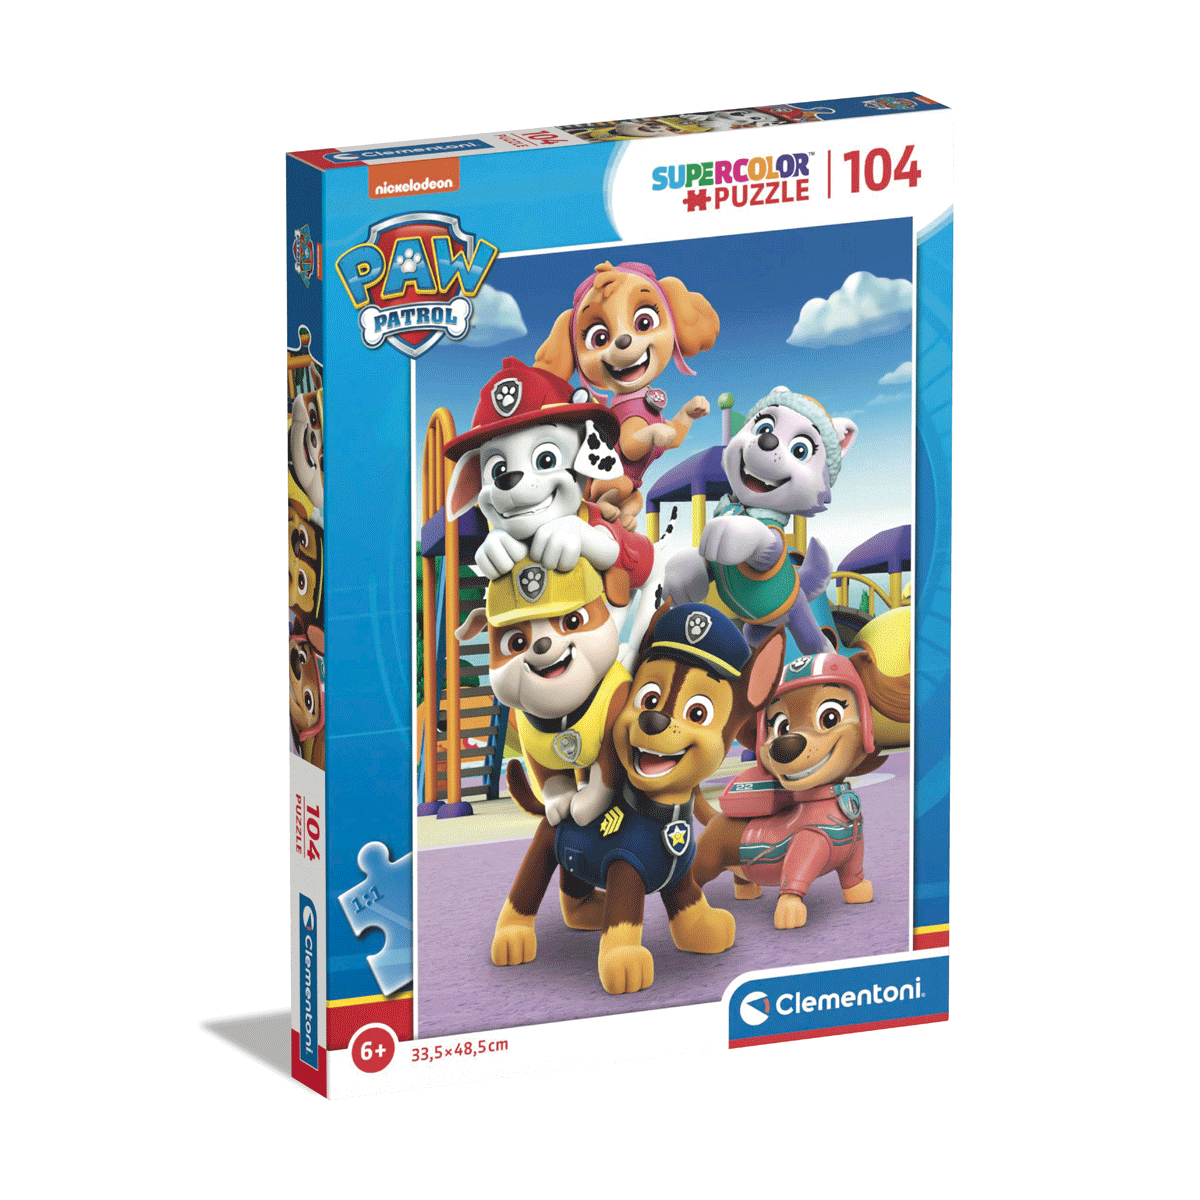 Clementoni supercolor puzzle - paw patrol - 104 pezzi, puzzle bambini 6 anni - CLEMENTONI